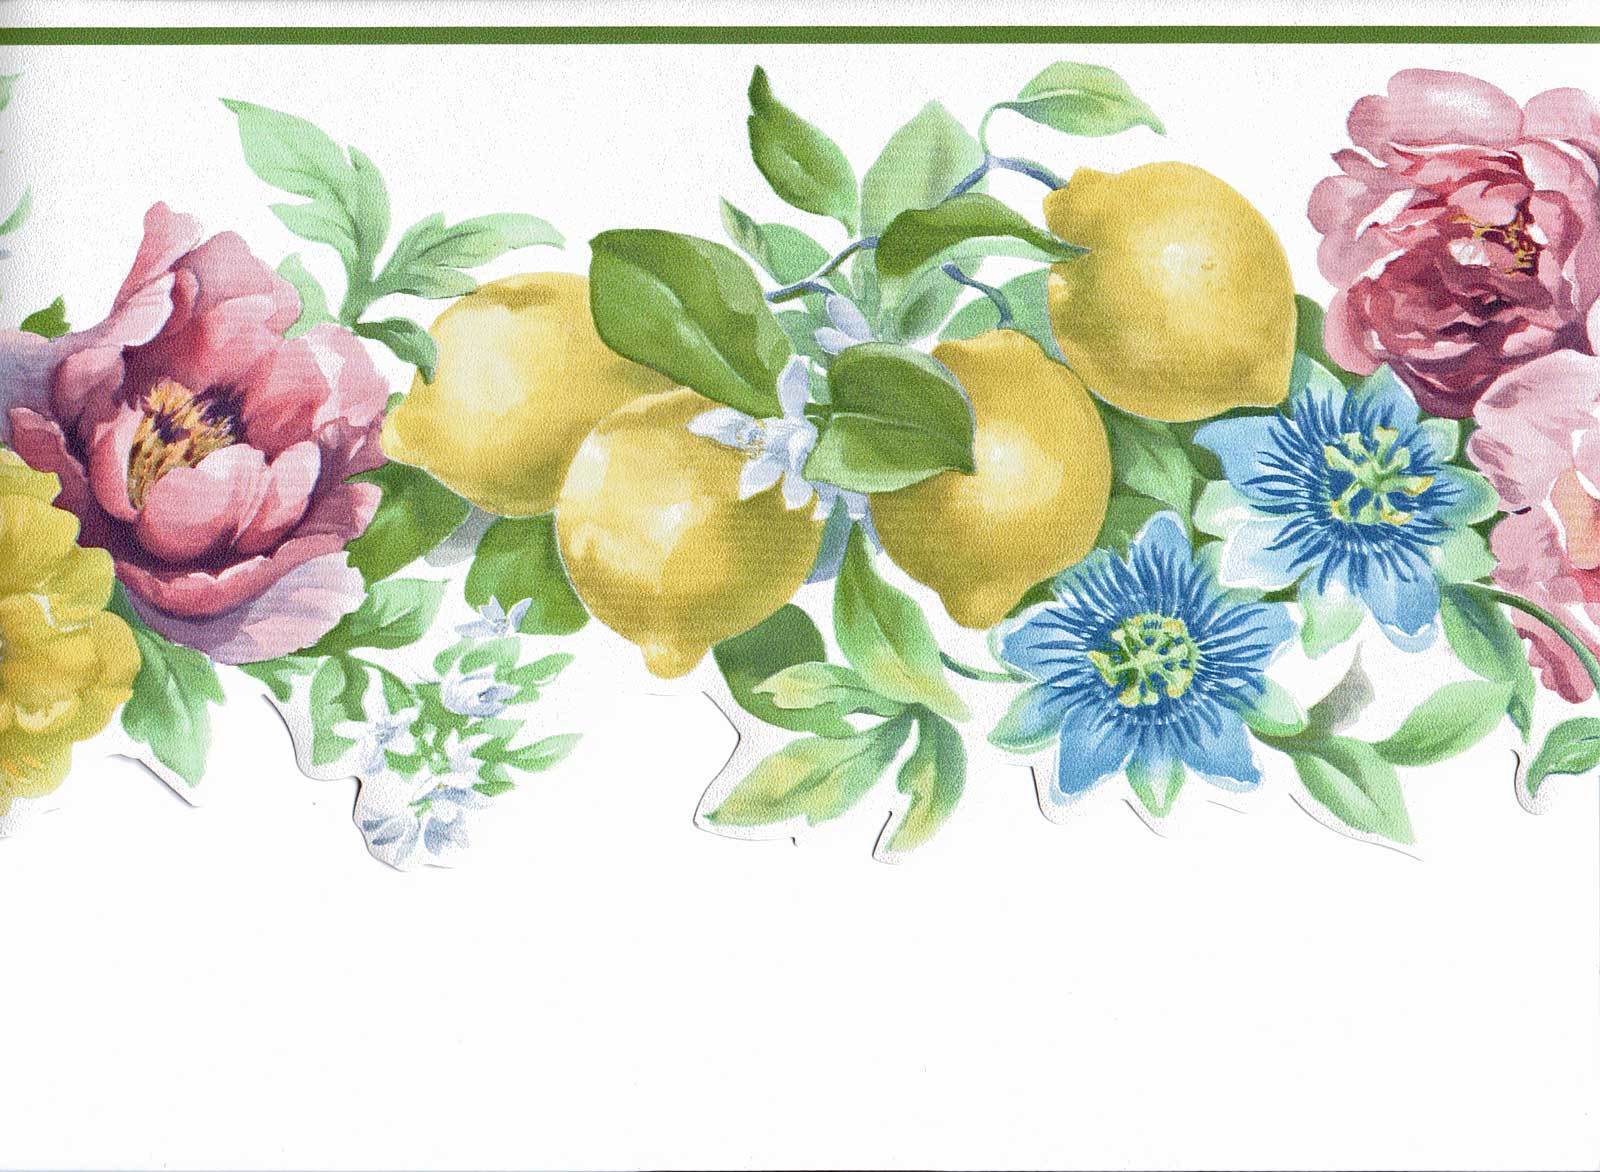 Apples Soft Flowers Only Wallpaper Border 100s Unique Borders